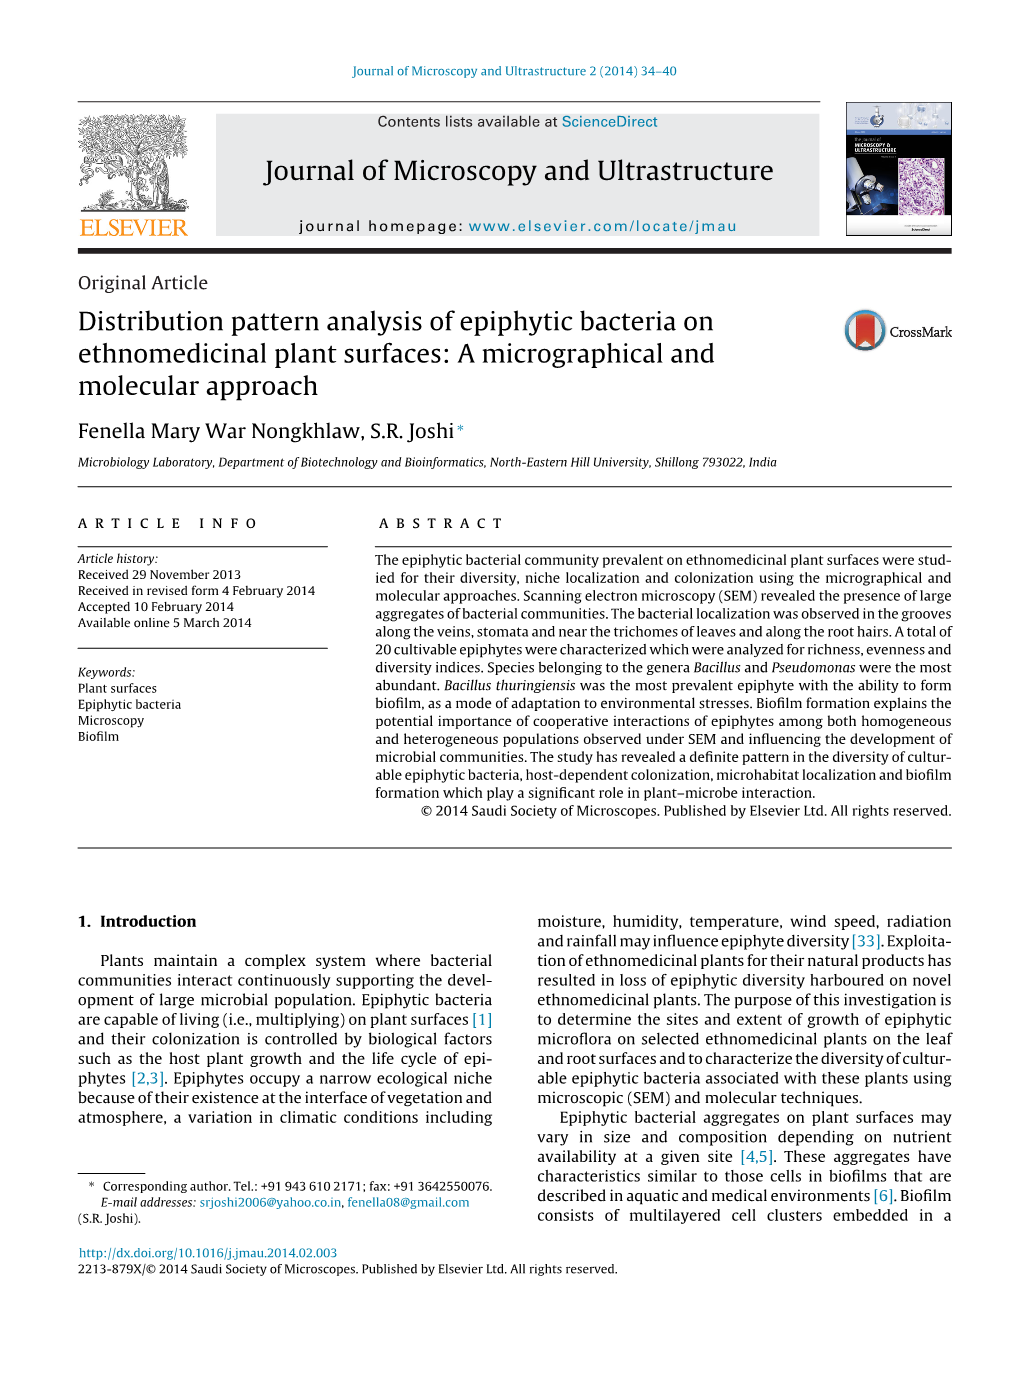 Distribution Pattern Analysis of Epiphytic Bacteria On